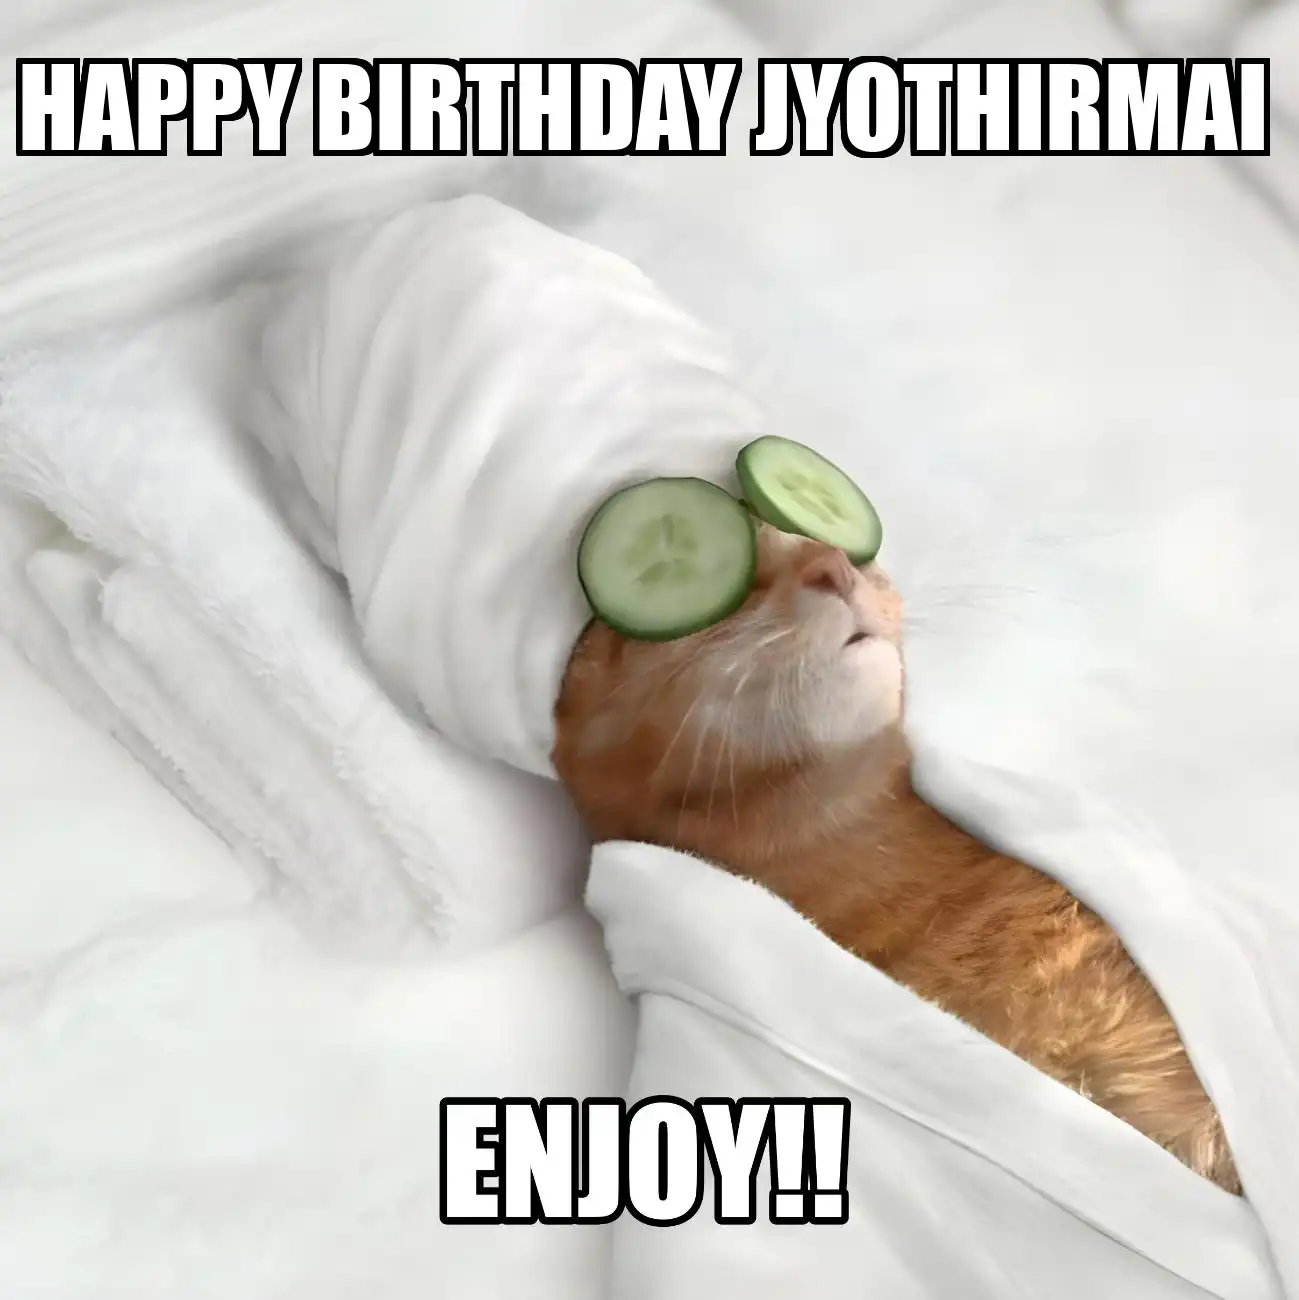 Happy Birthday Jyothirmai Enjoy Cat Meme